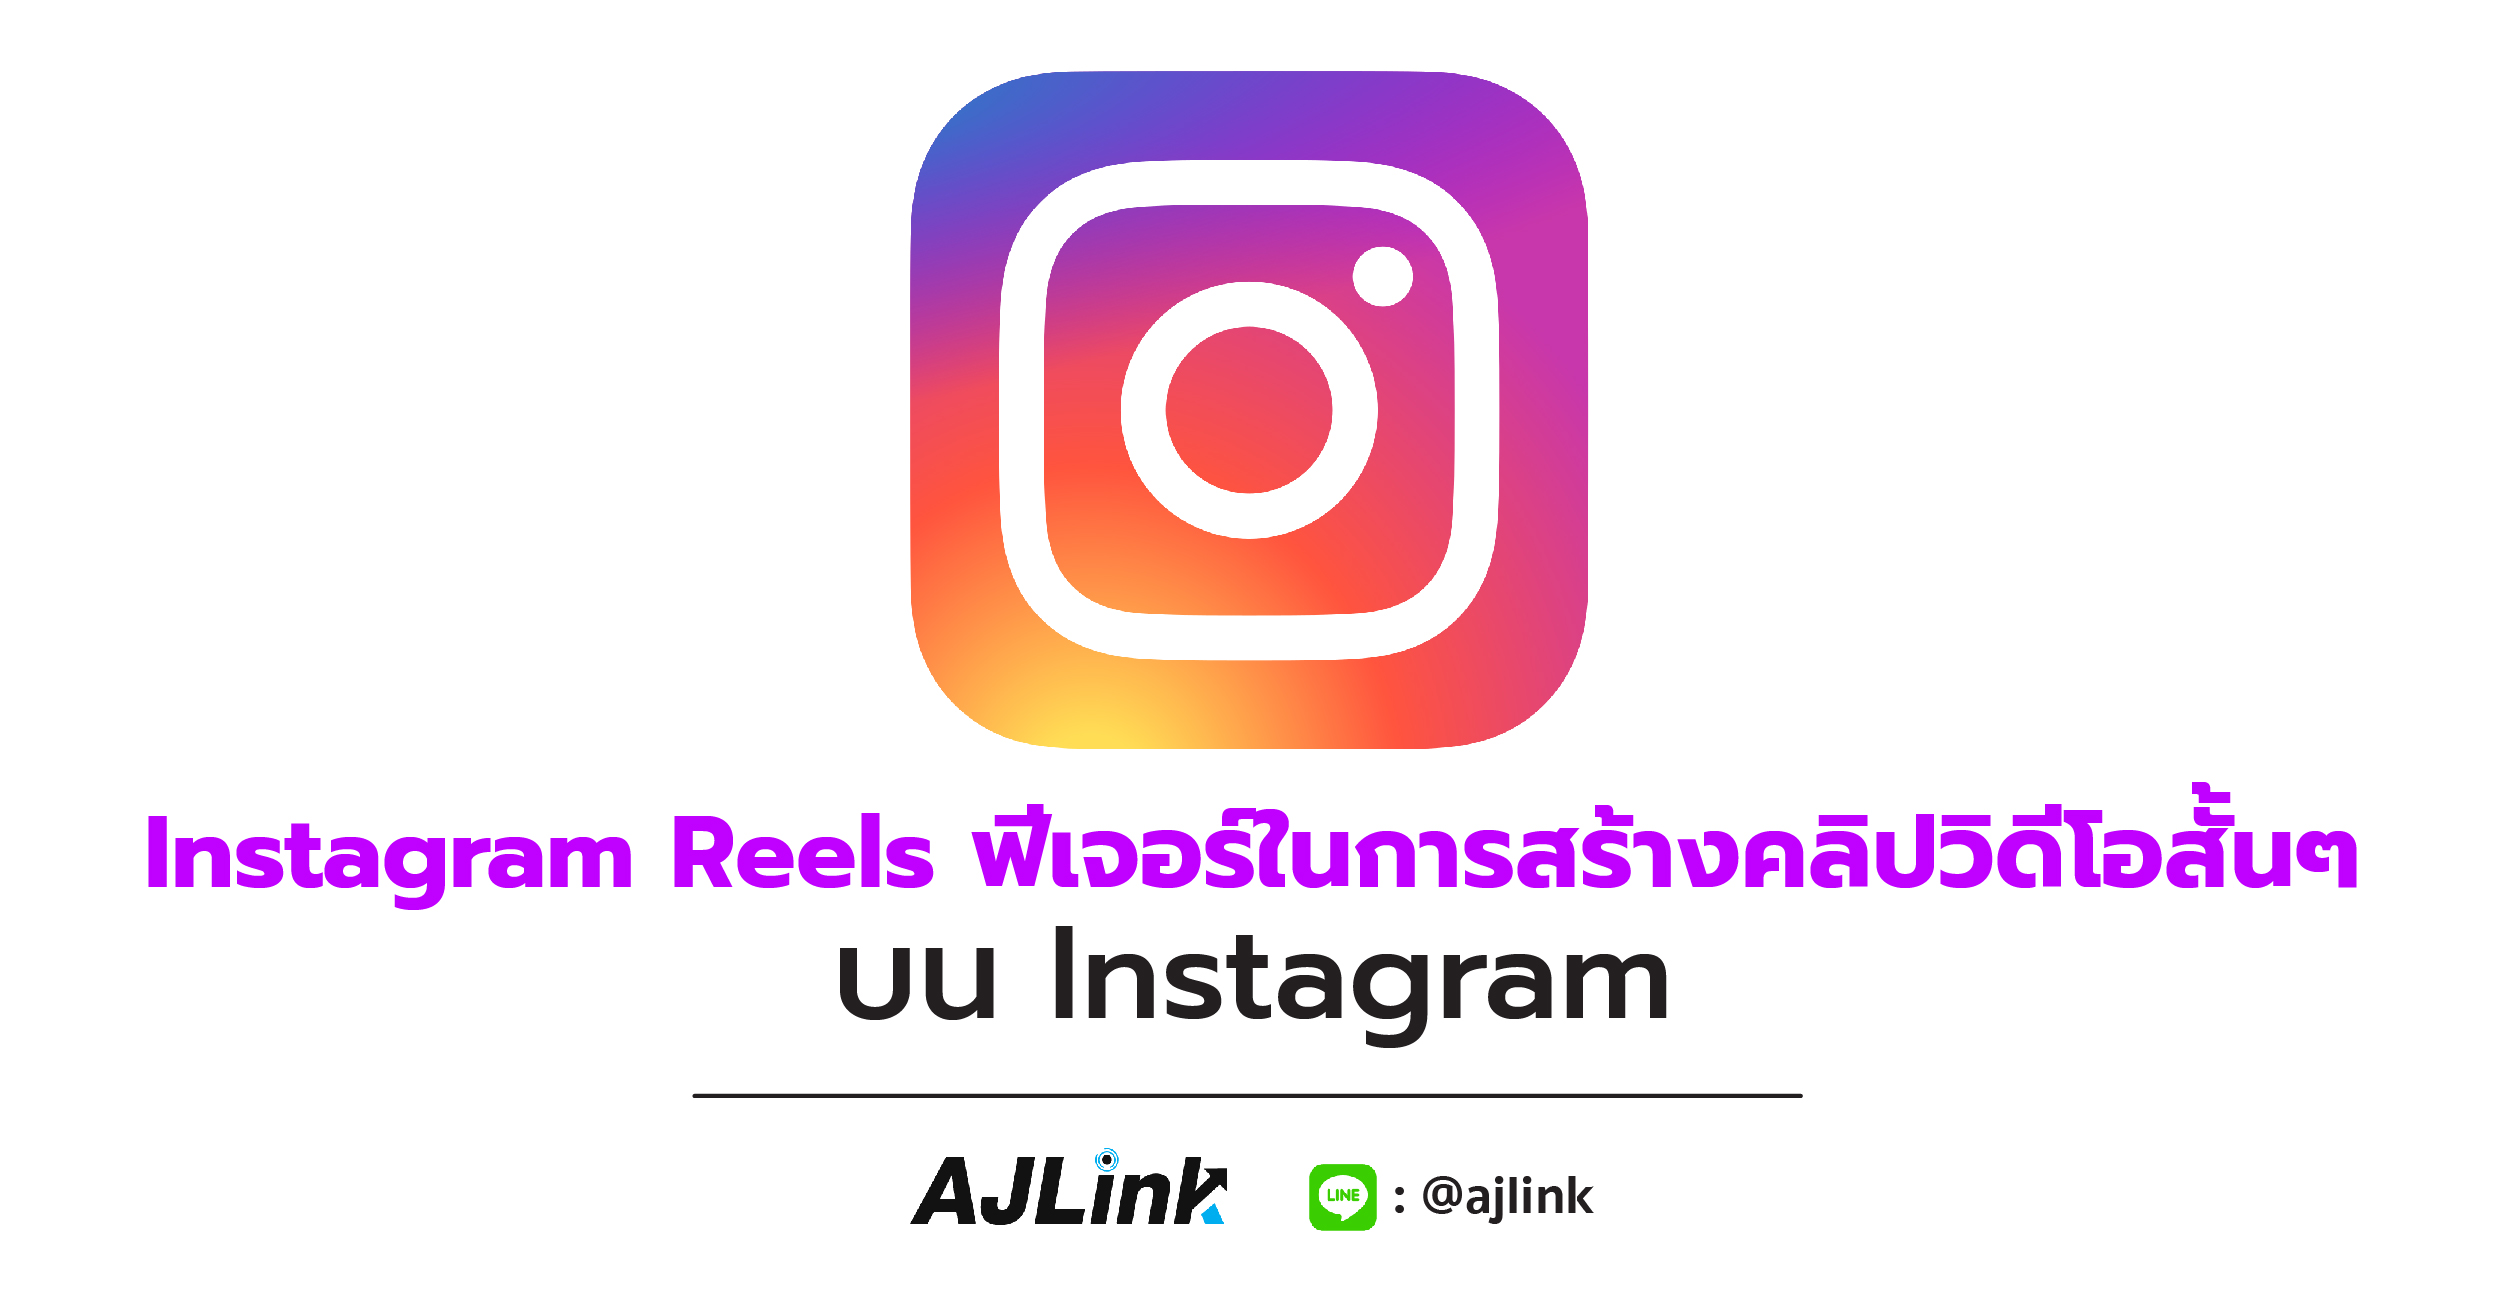 Instagram Reels ฟีเจอร์ในการสร้างคลิปวิดีโอสั้นๆ บน Instagram